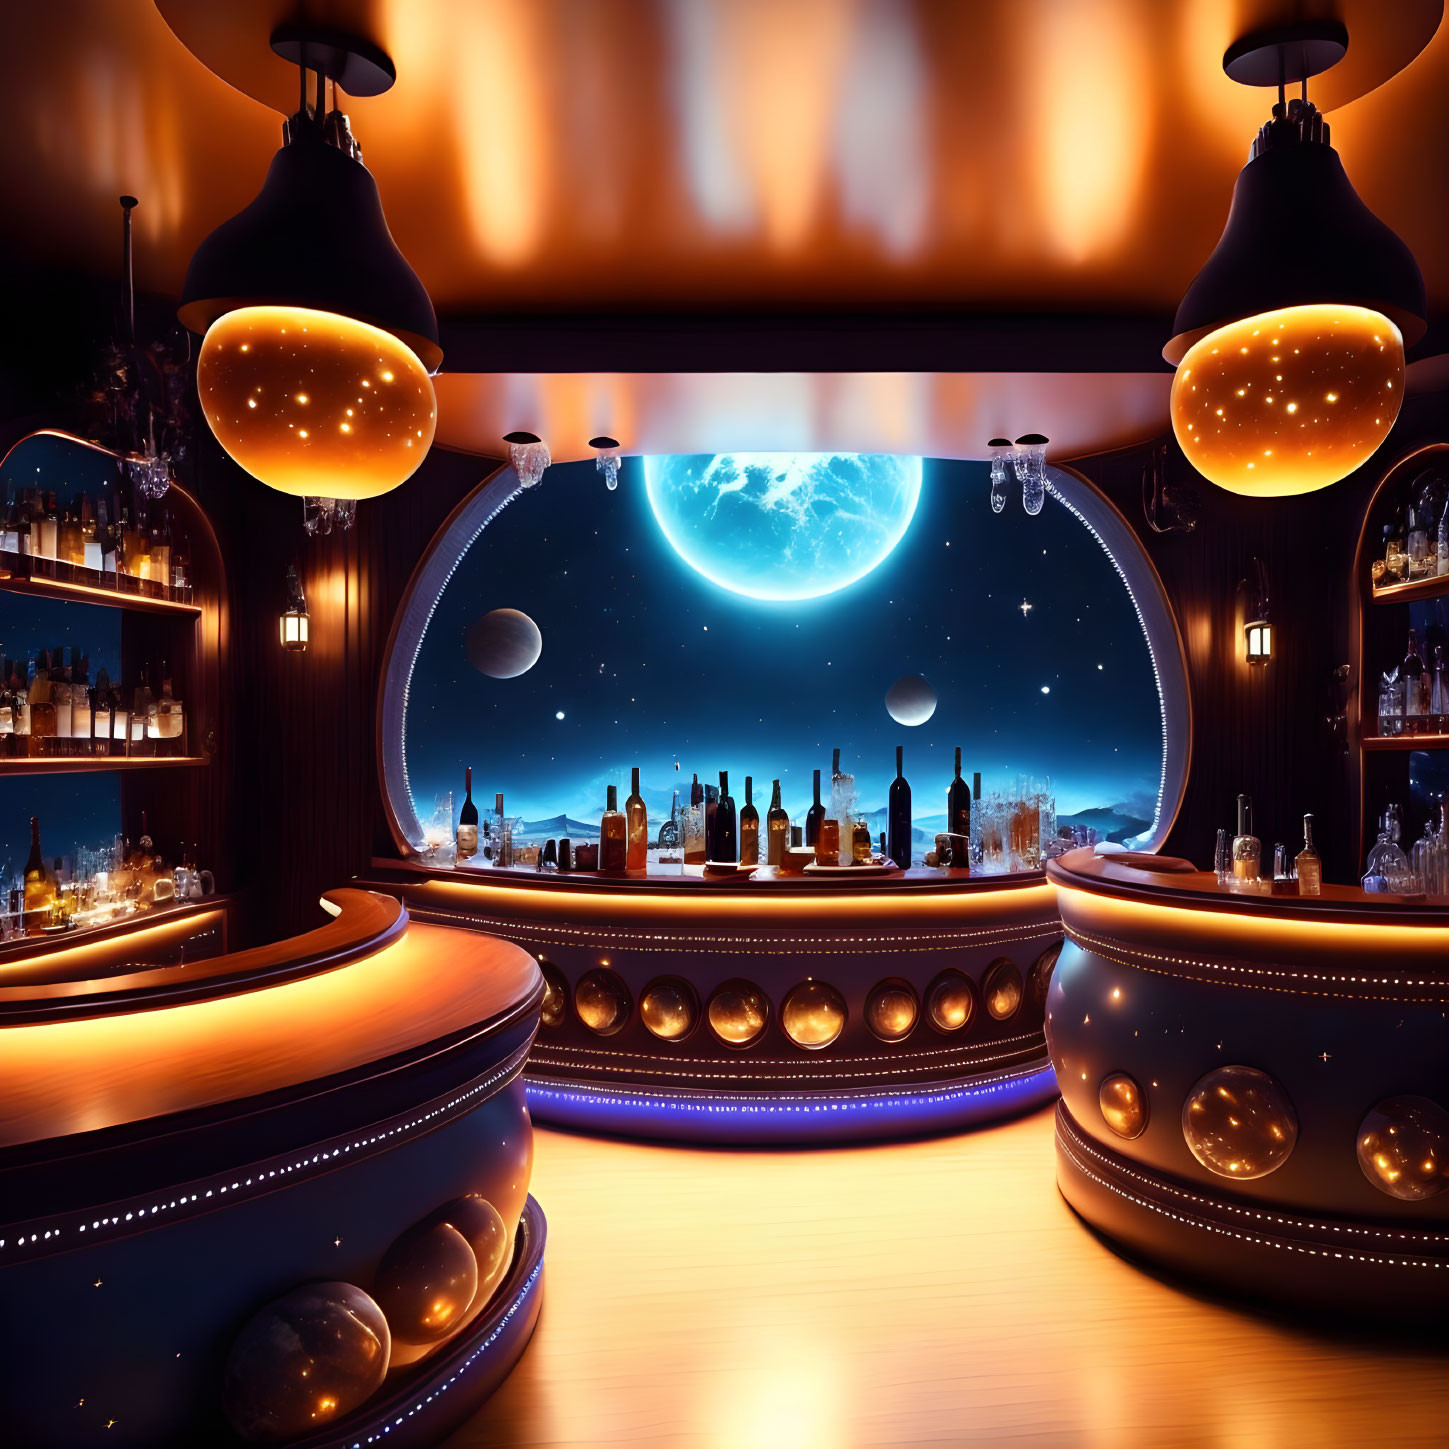 Sleek futuristic bar with celestial backdrop